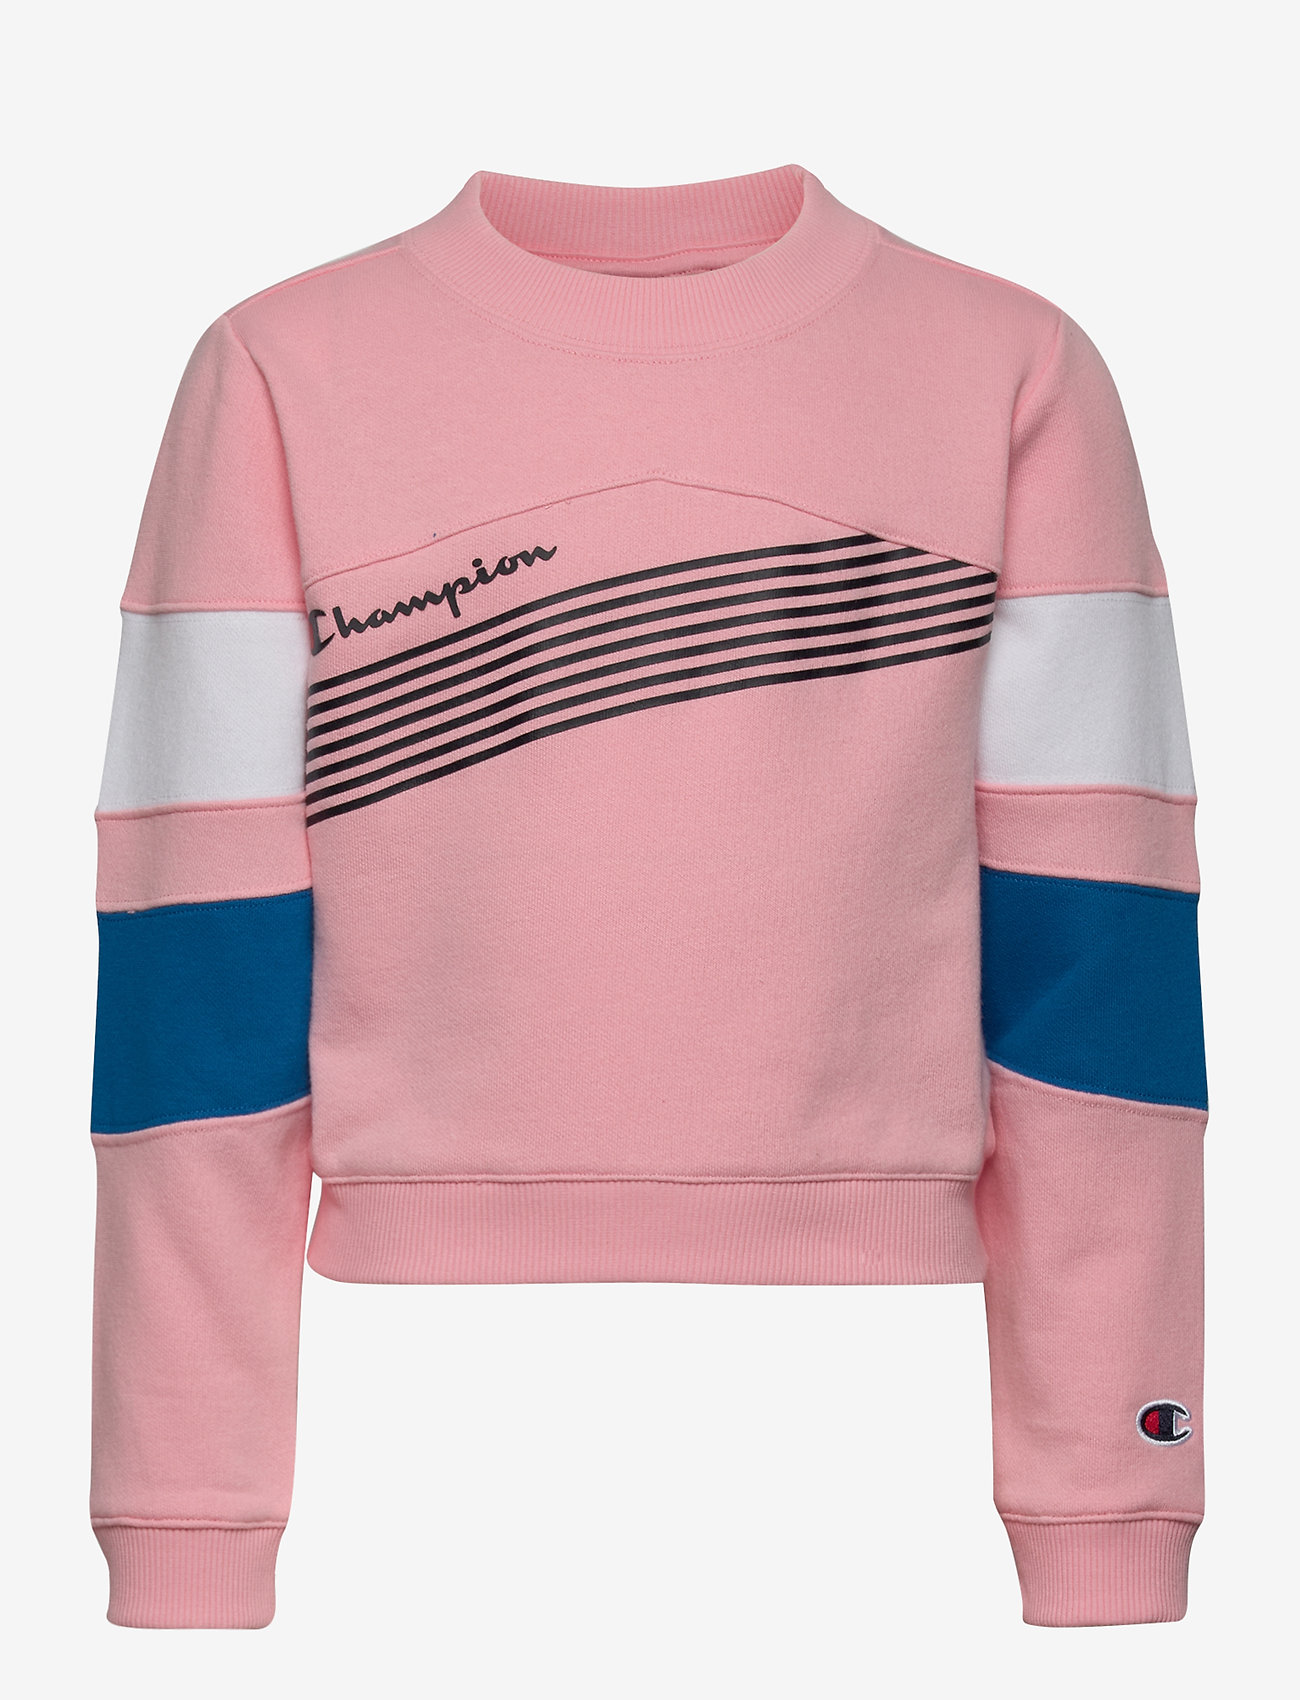 pink champion crewneck sweatshirt